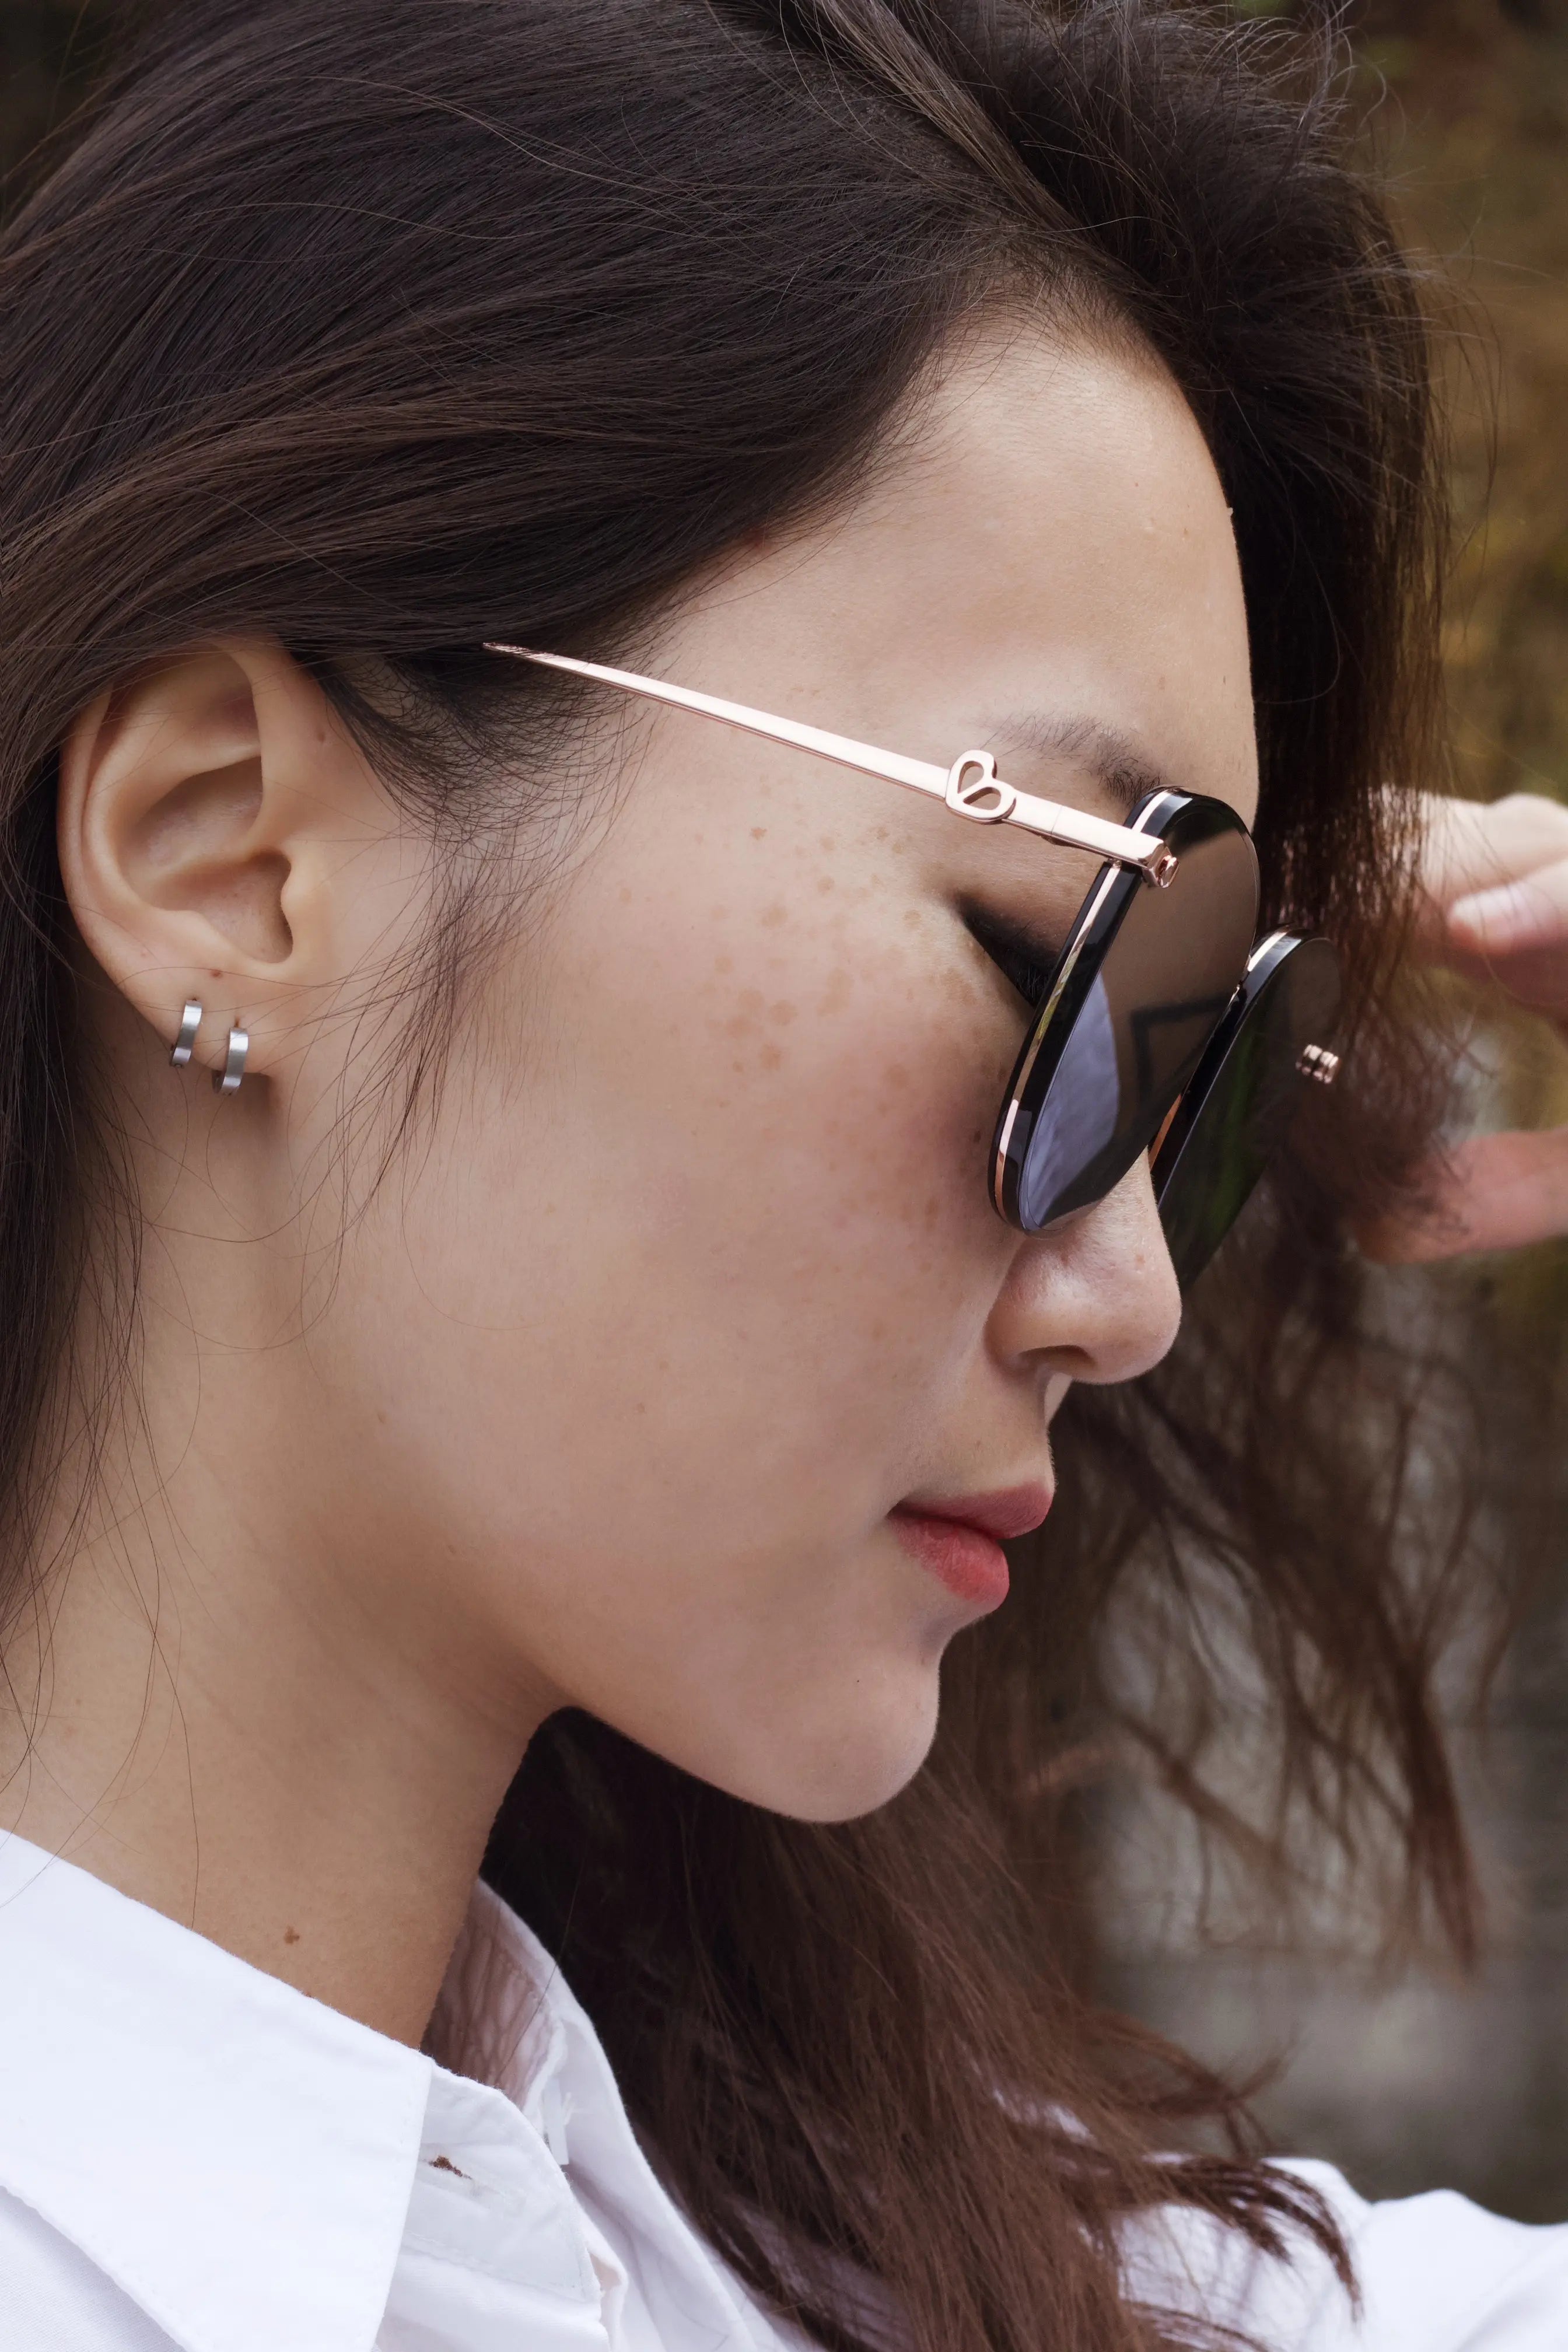 Confident Woman Wearing Julia Sunglasses – Showcasing the premium quality of the sunglasses' hinge